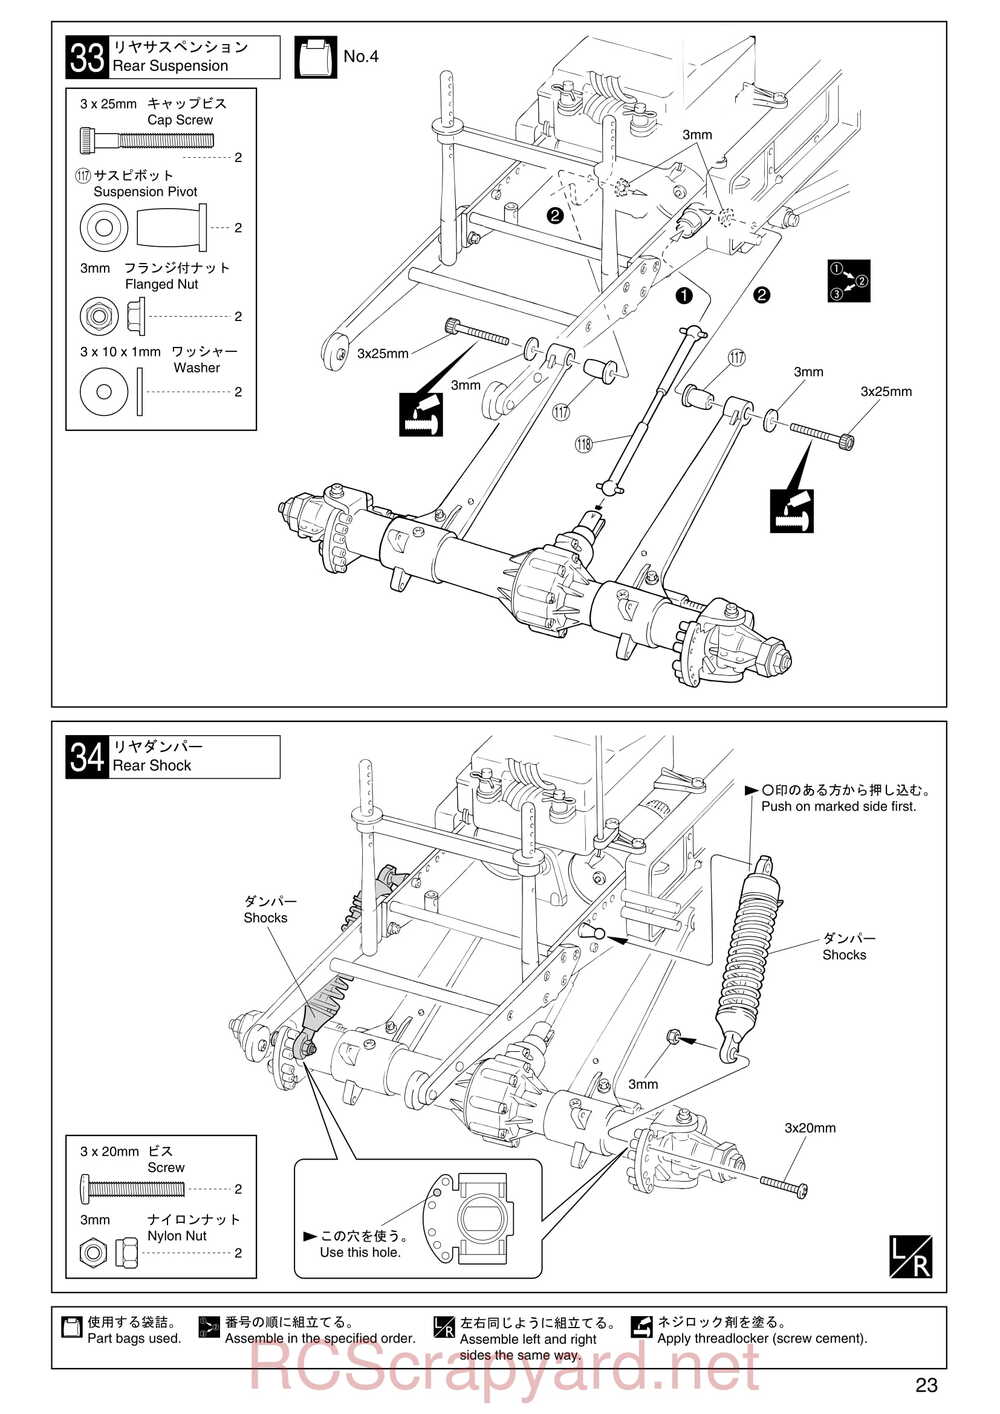 Kyosho - 30521b - Twin-Force - Manual - Page 23